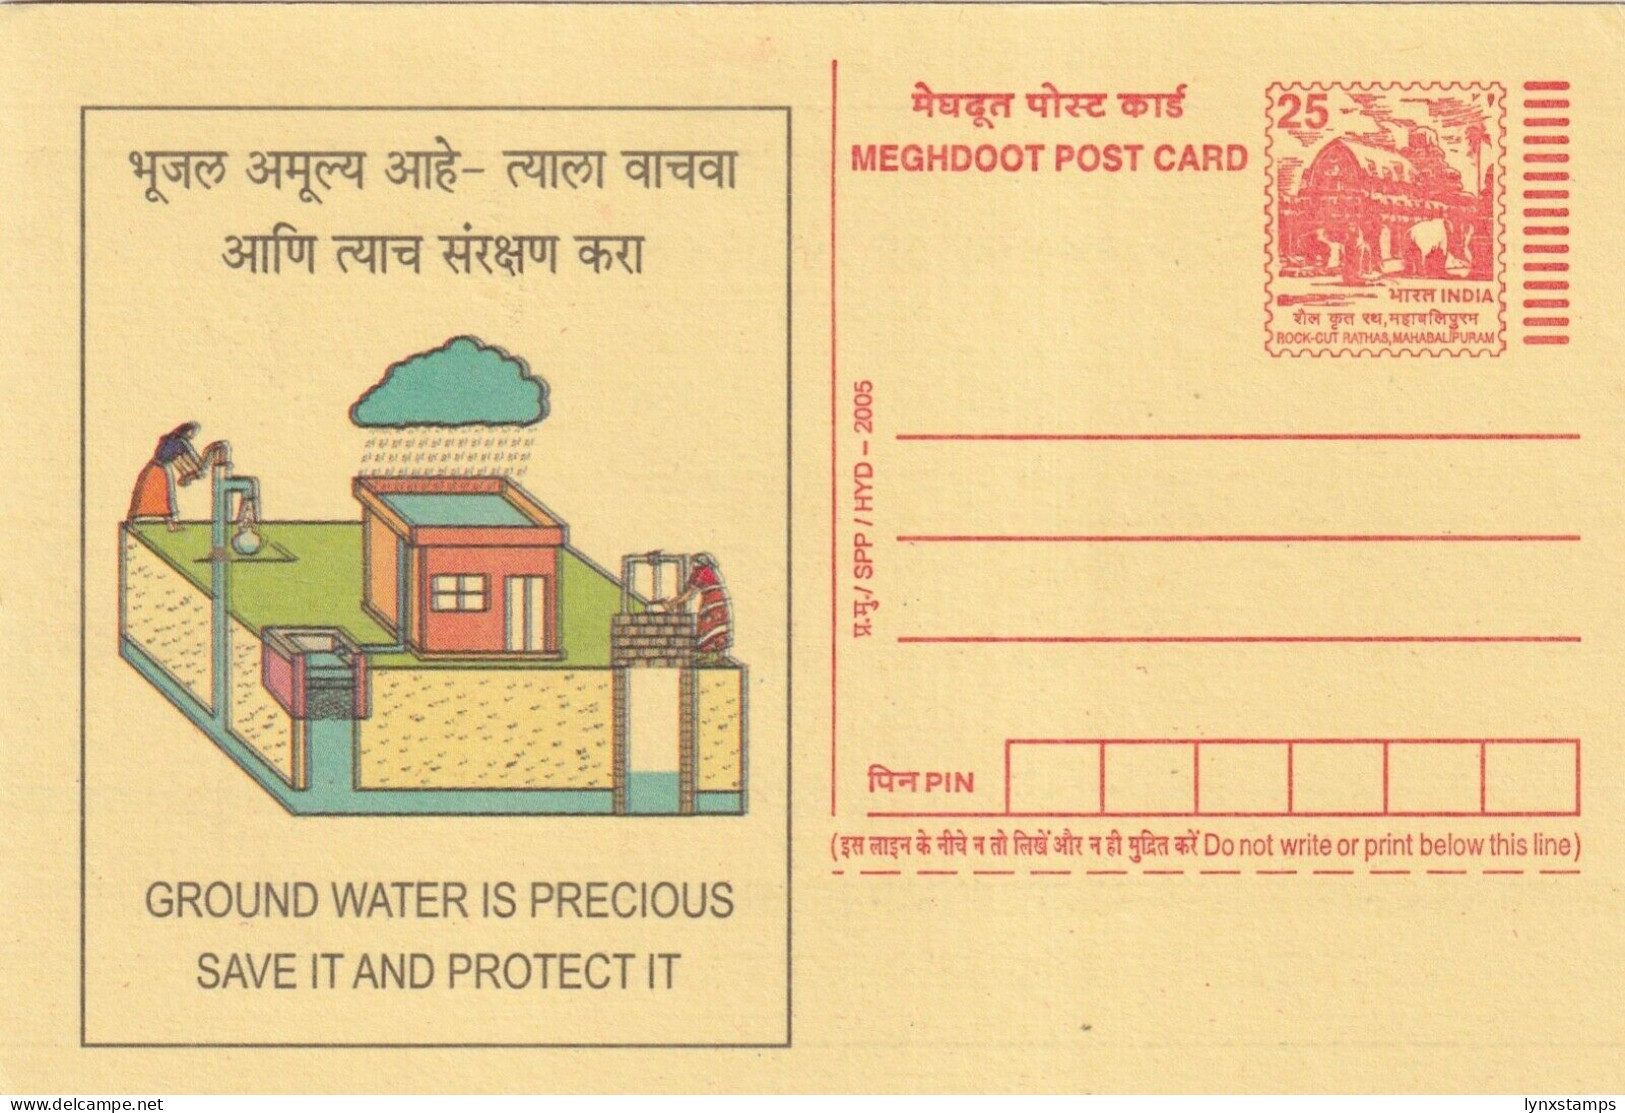 G018 India 2005 Postal Stationery - Sin Clasificación